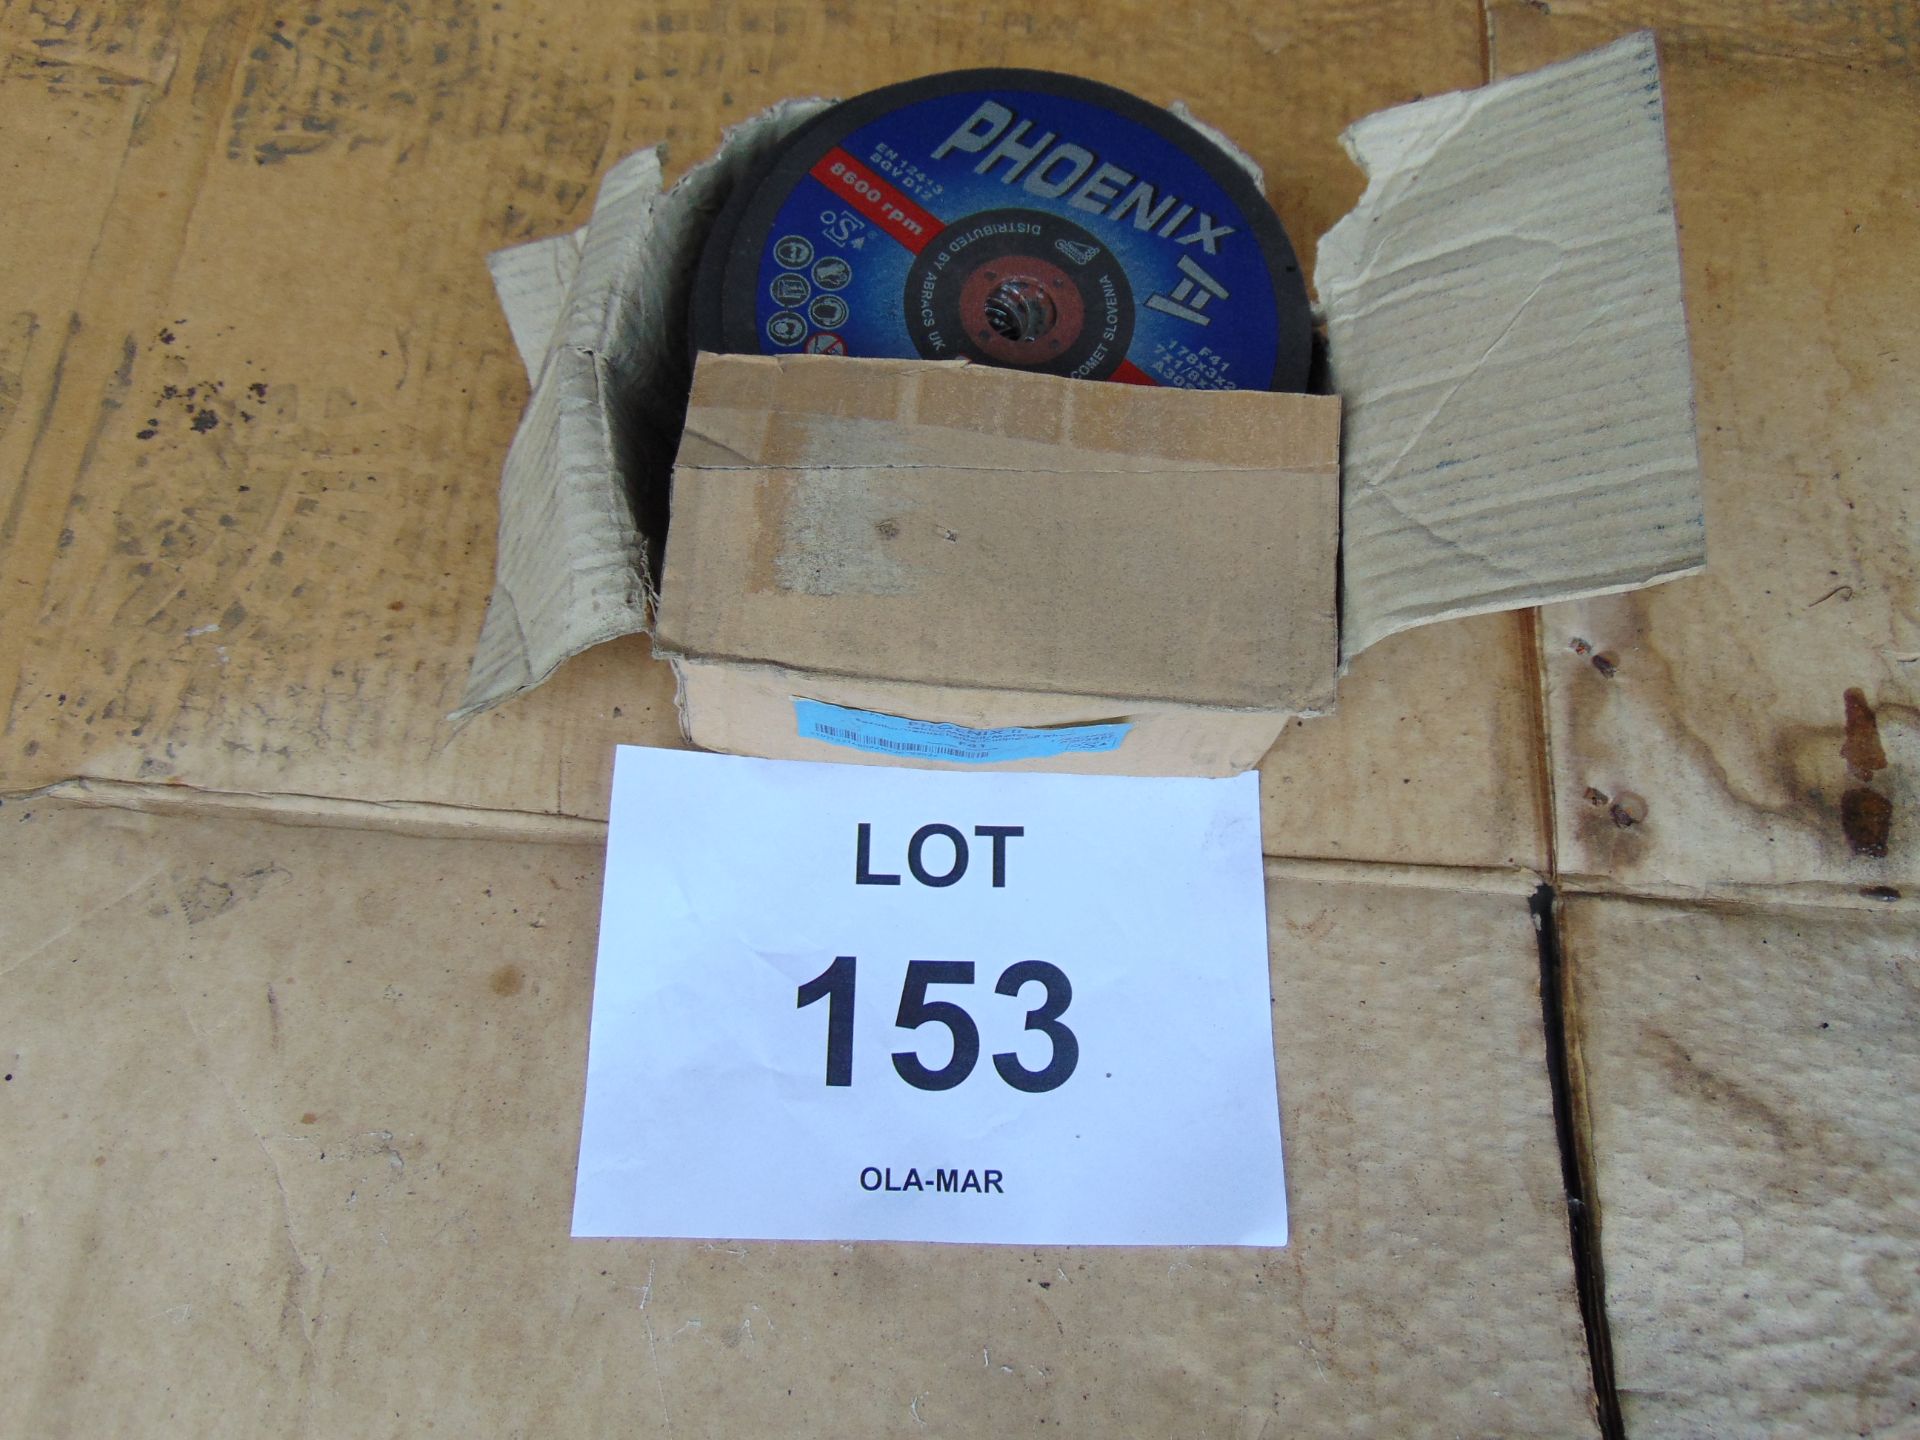 1 x Box of 25 Phoenix Metal Cutting Discs - Bild 4 aus 4